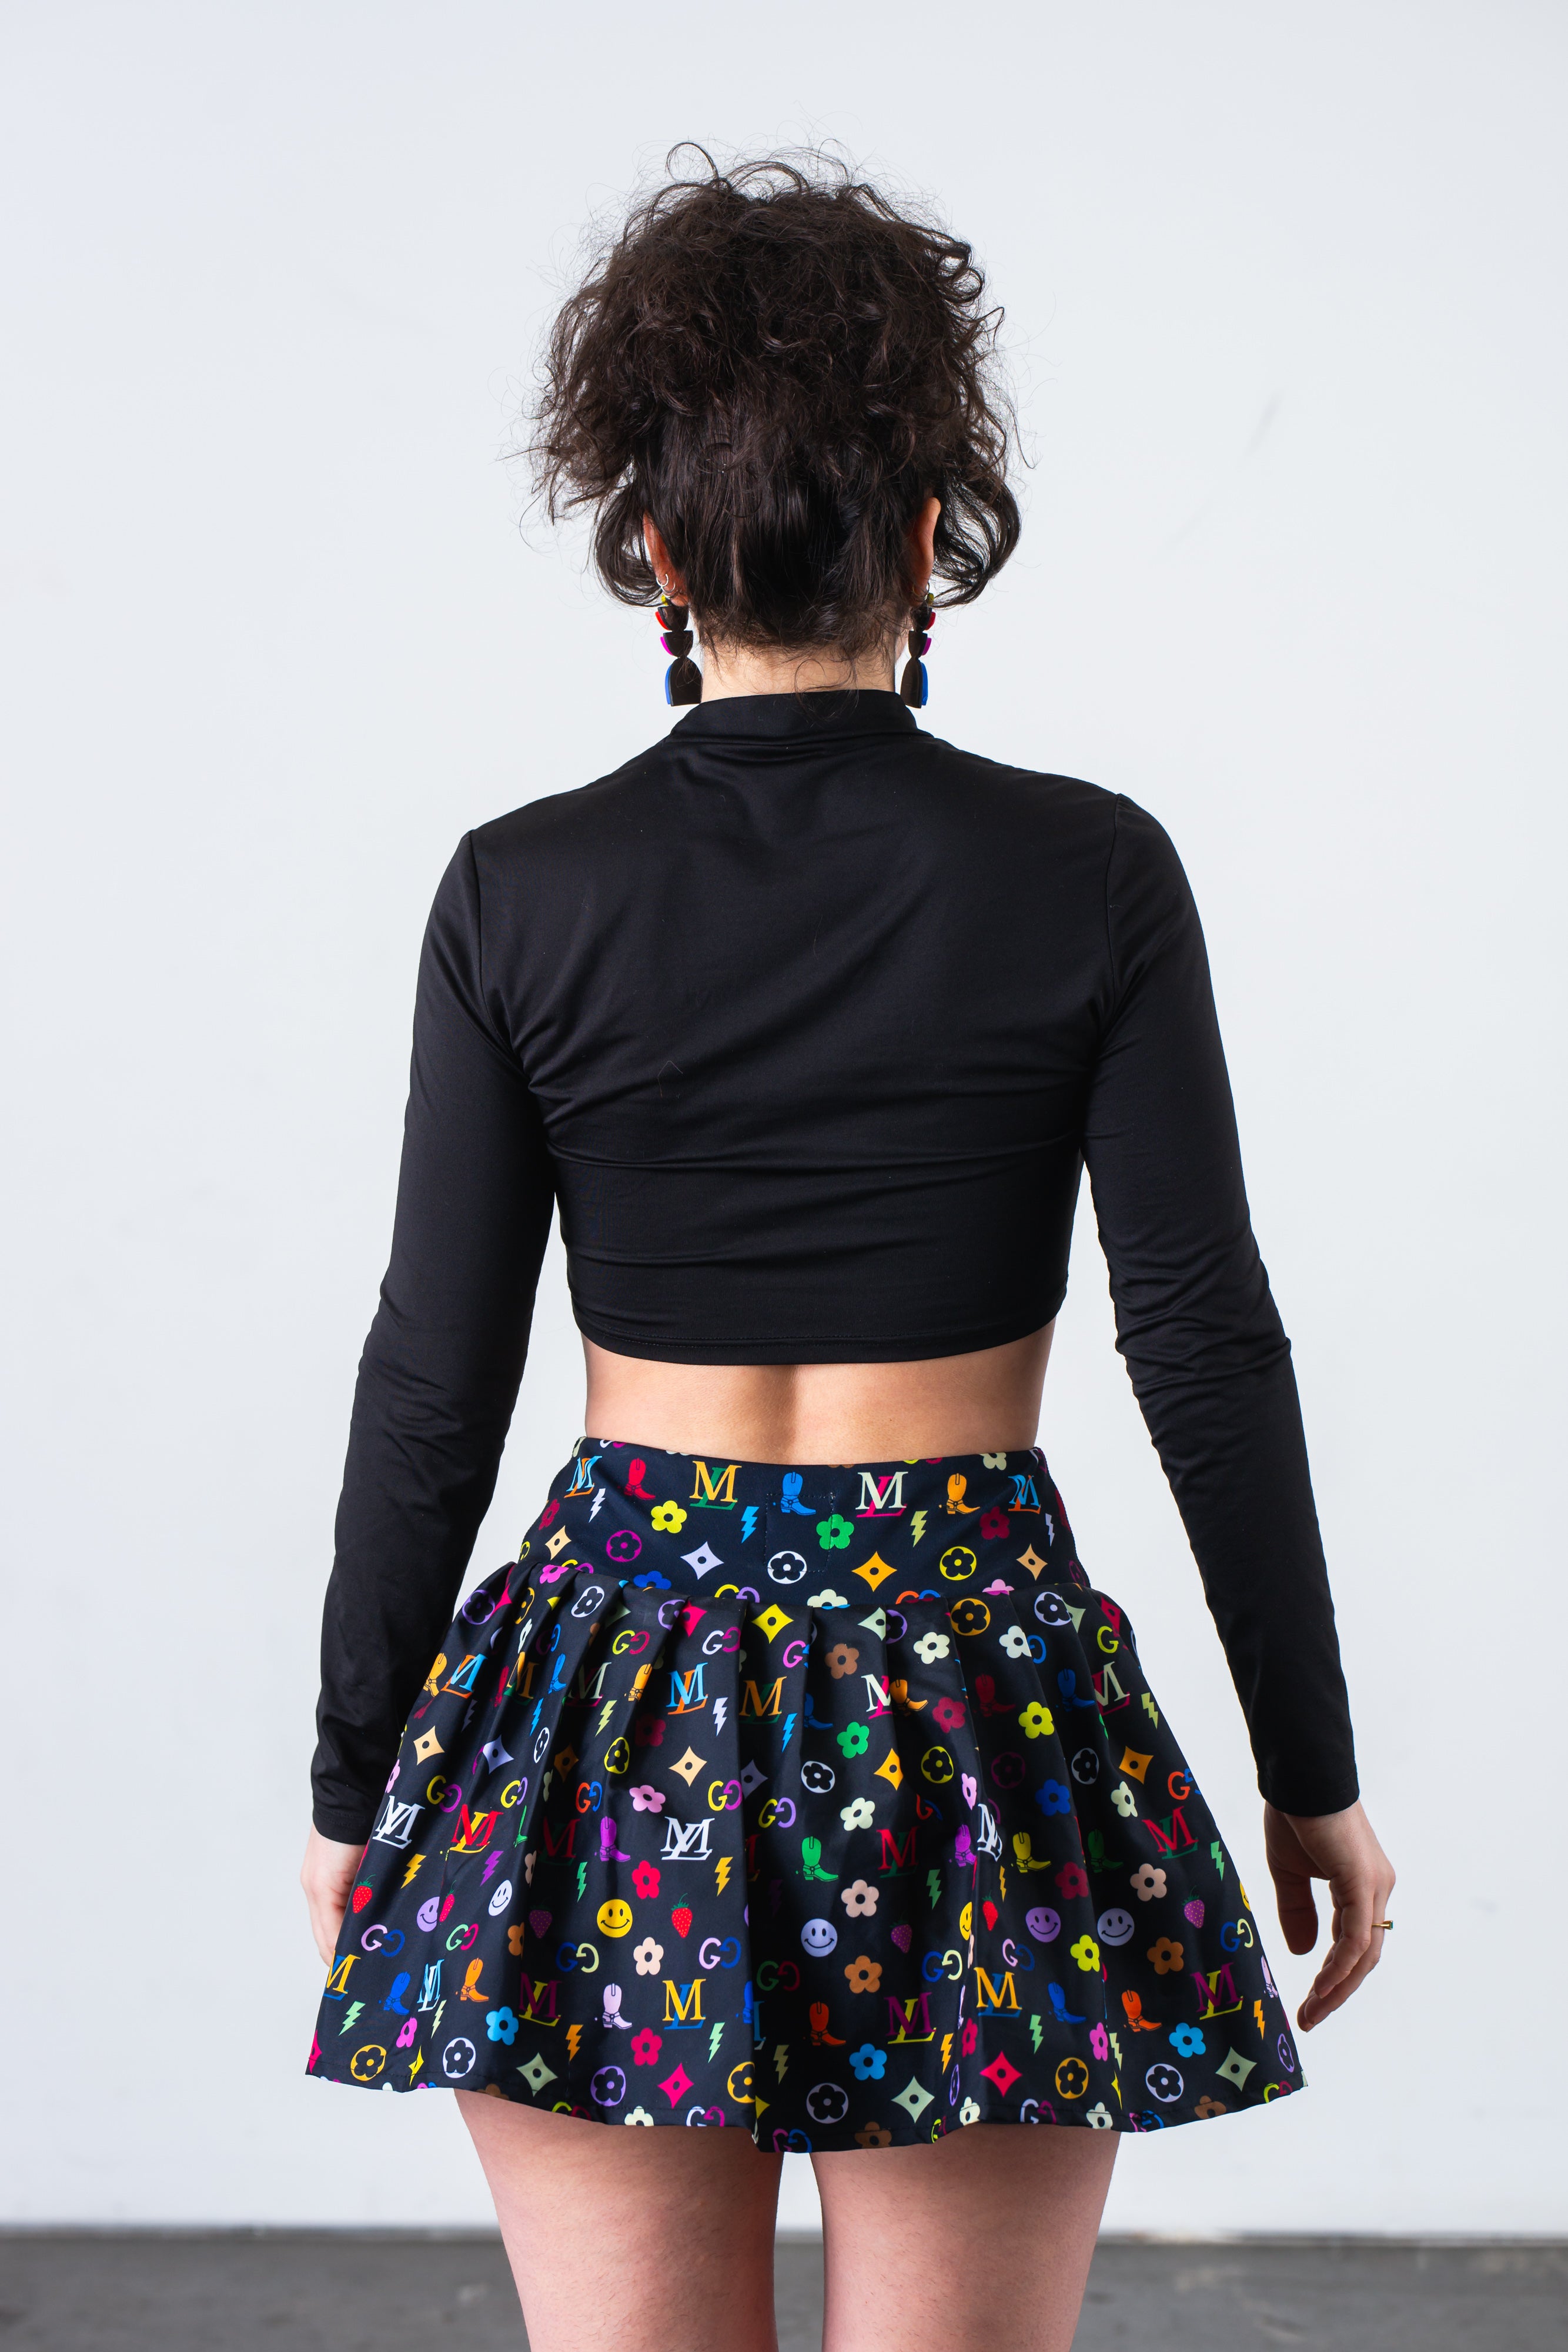 Designer Trip Black Tennis Skirt